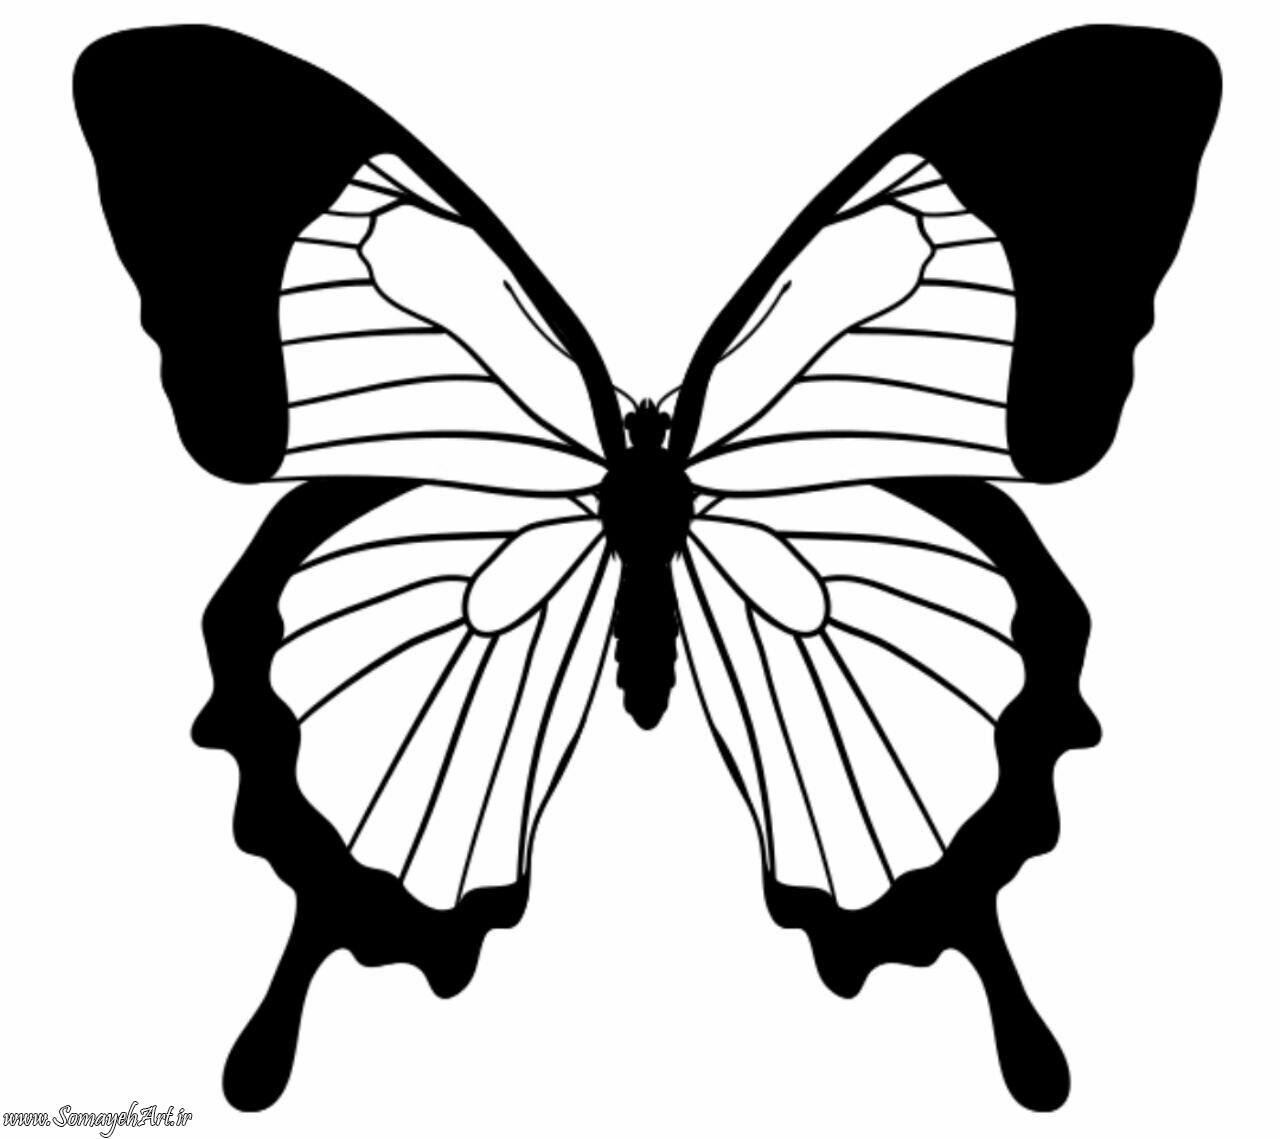 Распечатки бабочек черно. Бабочка рисунок. Бабочка черно белая. Черно белые бабы. Трафареты бабочки.